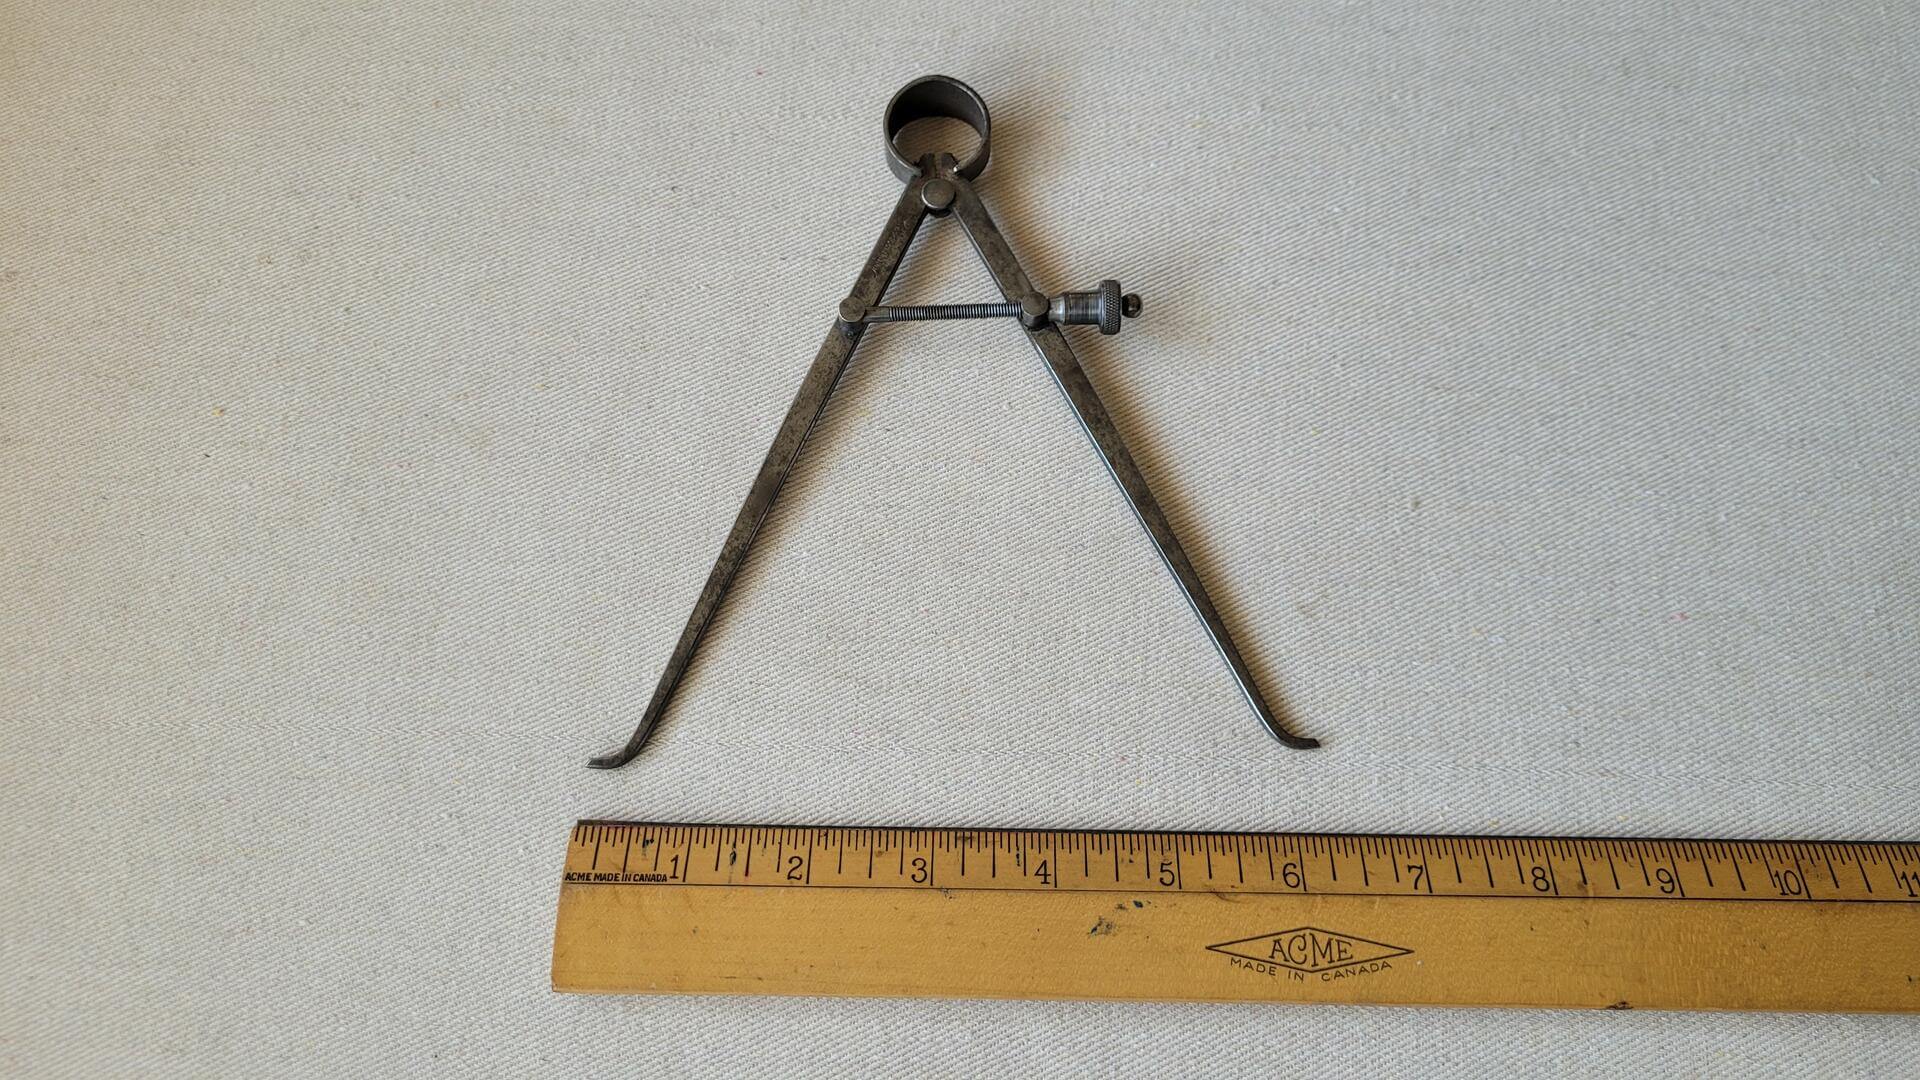 union-tool-co-adjustable-spring-outside-divider-caliper-orange-mass-antique-vintage-made-in-usa-machinist-carpenter-marking-measuring-tool-measurements